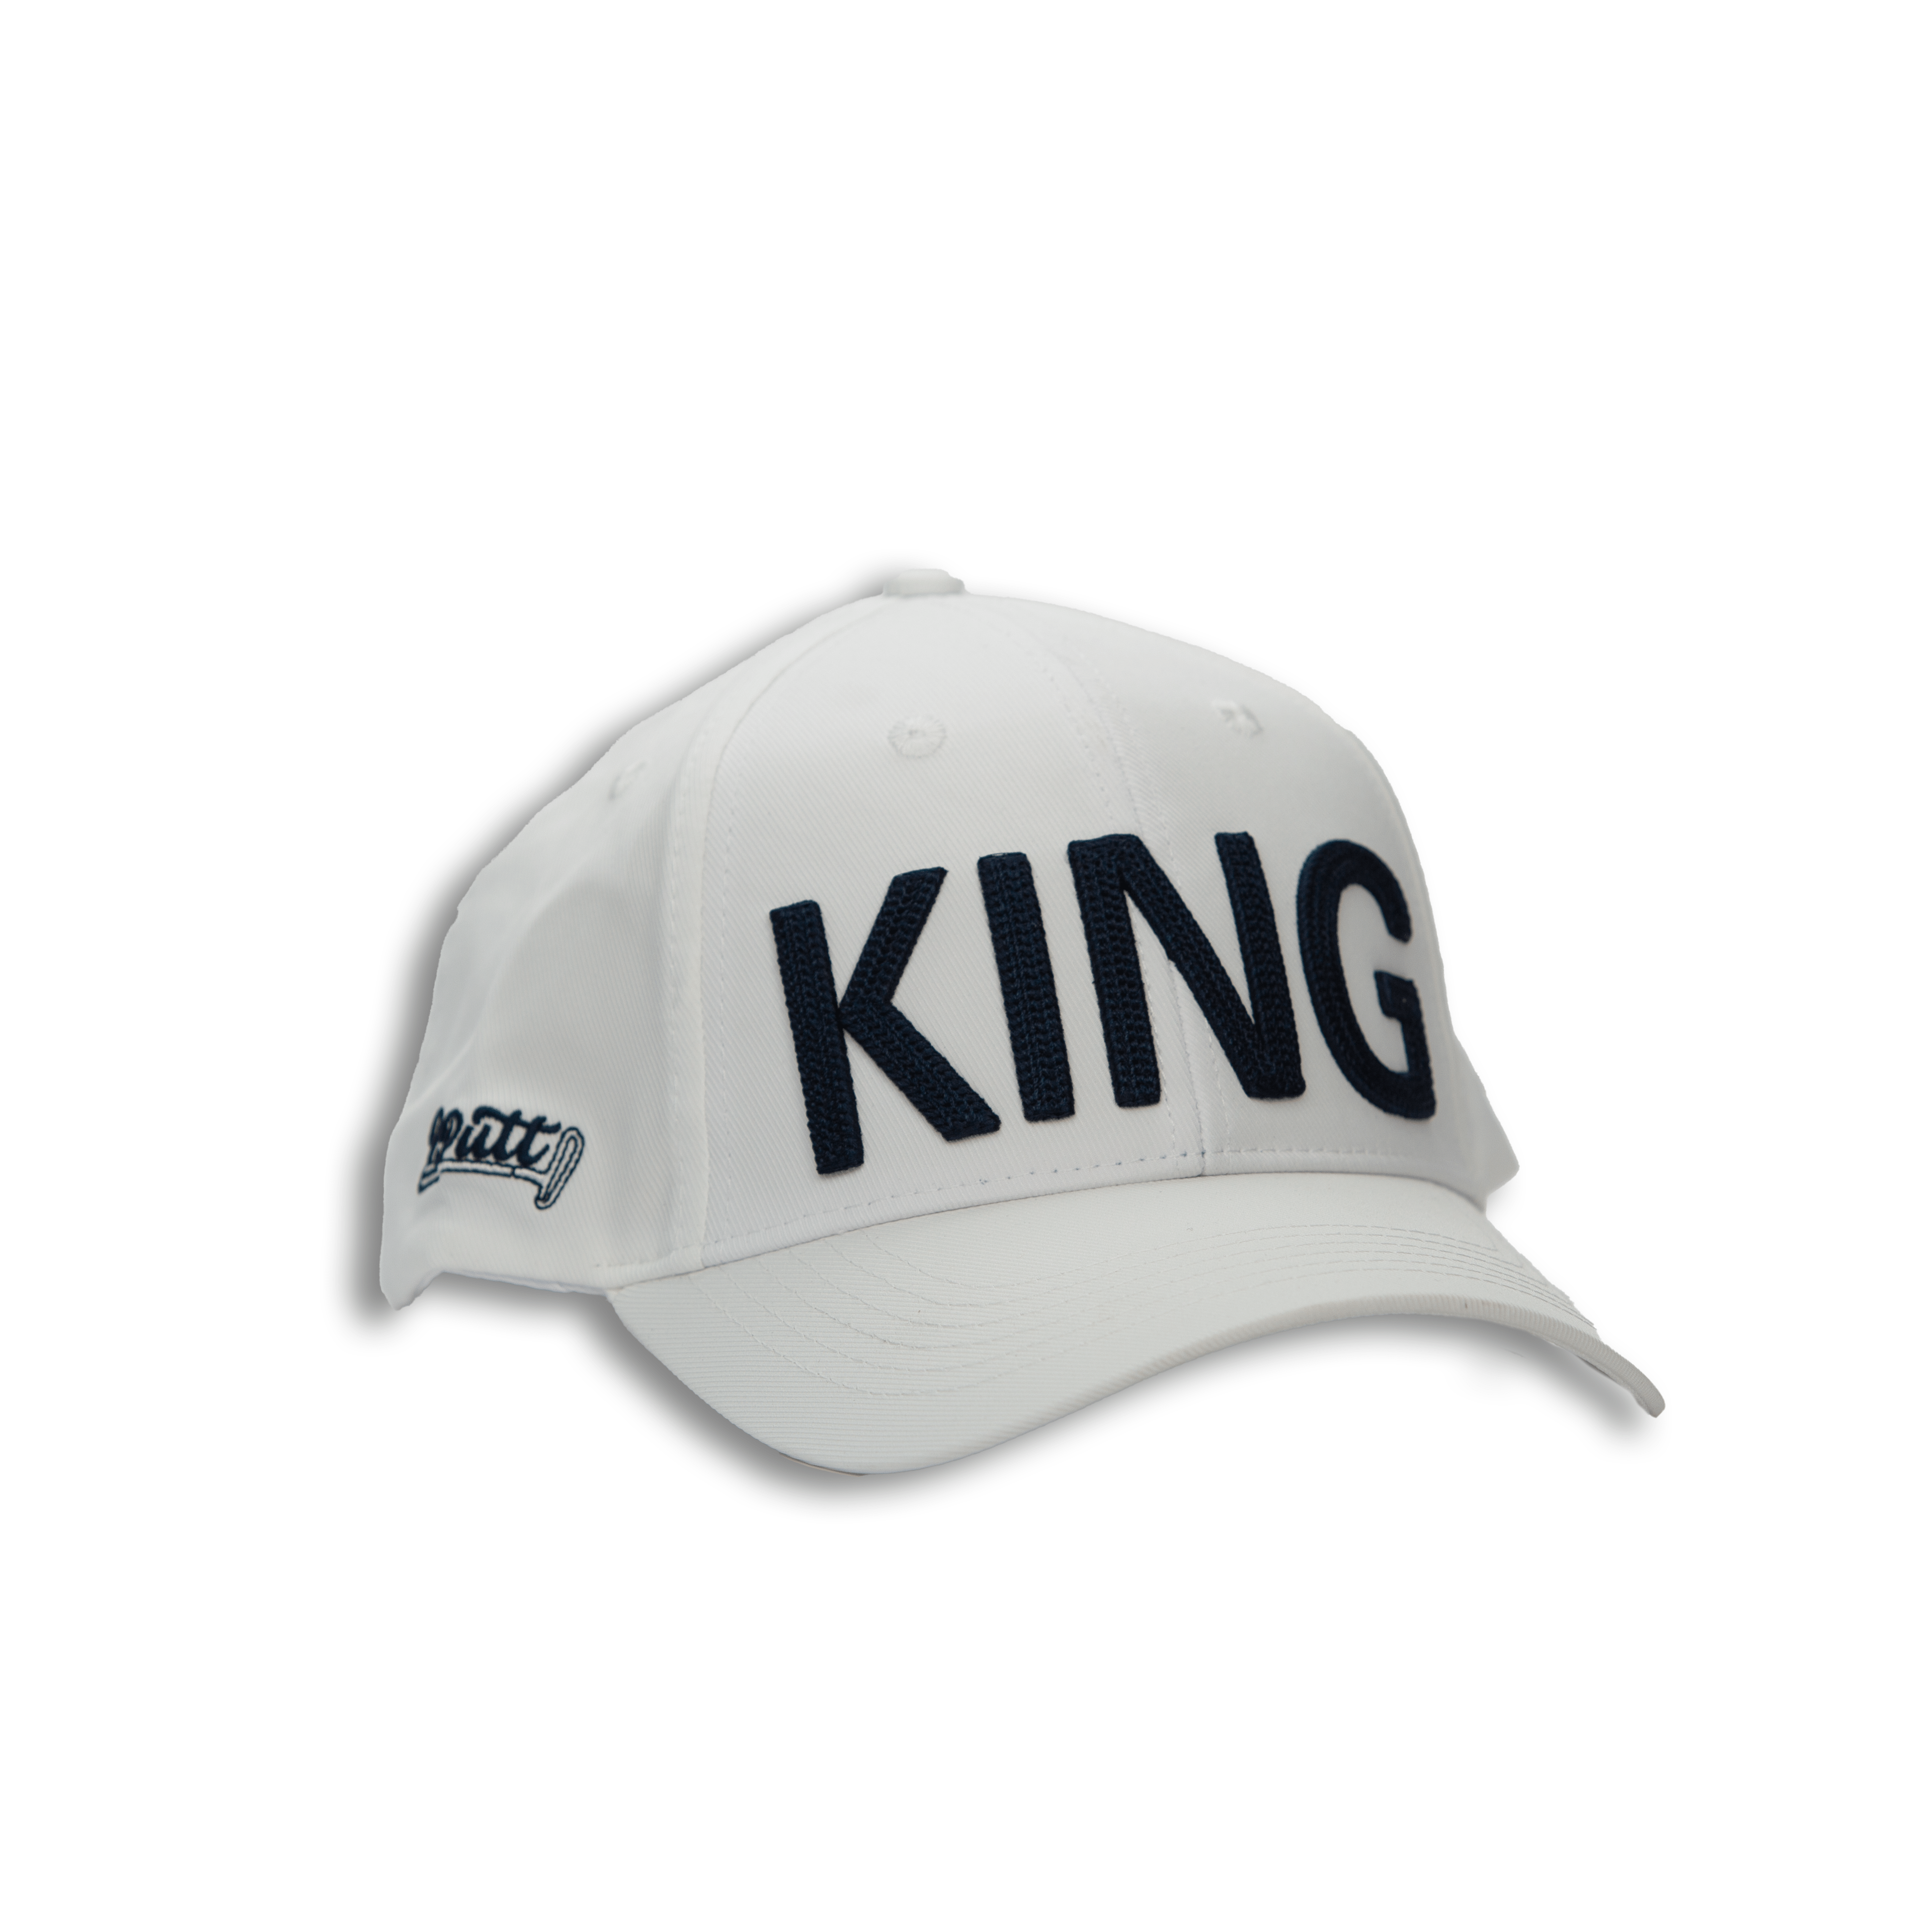 KING Hat